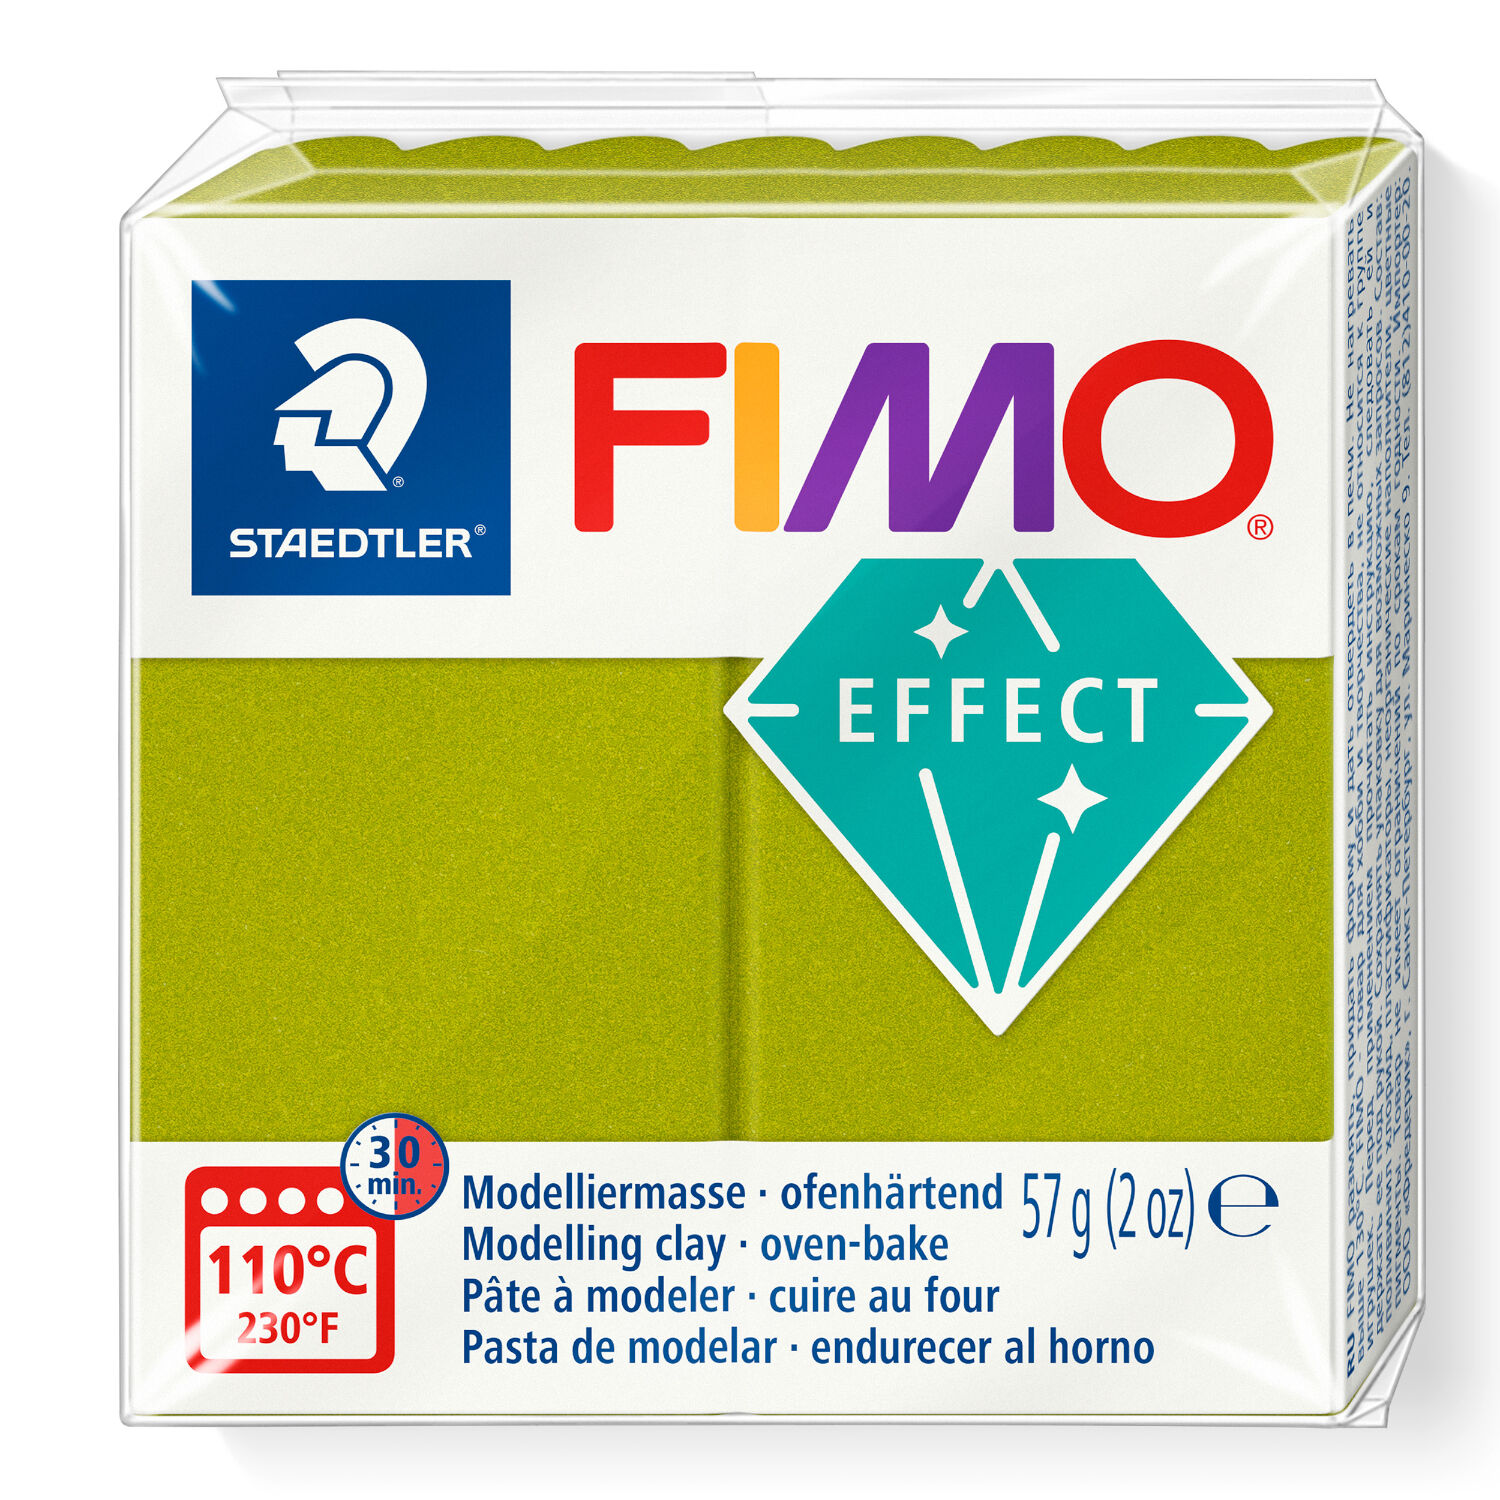 NEU Fimo Effect 57g, Metallic Grn